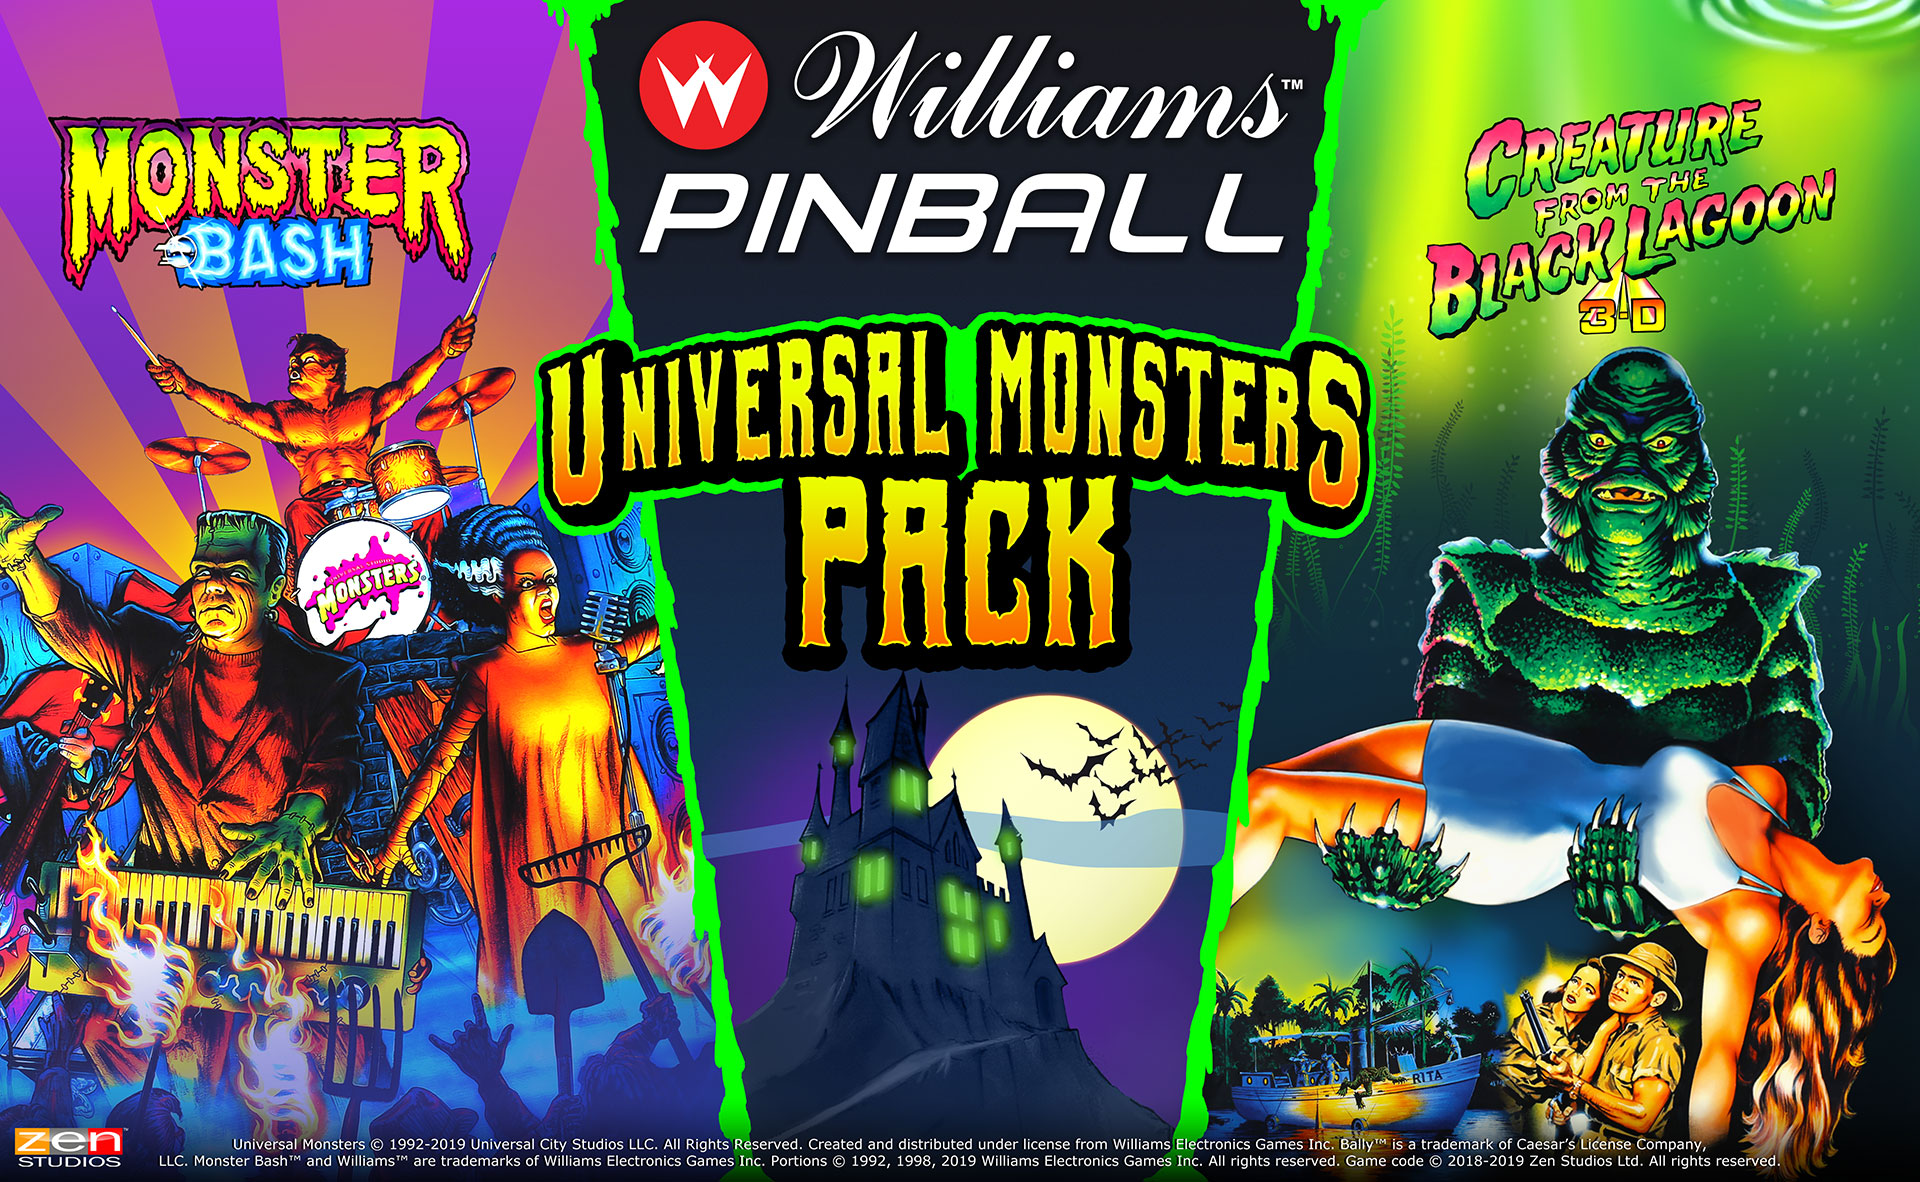 Pinball Fx3 / Pinball FX3: Williams Pinball (Volume 3) - PS4 Review ...